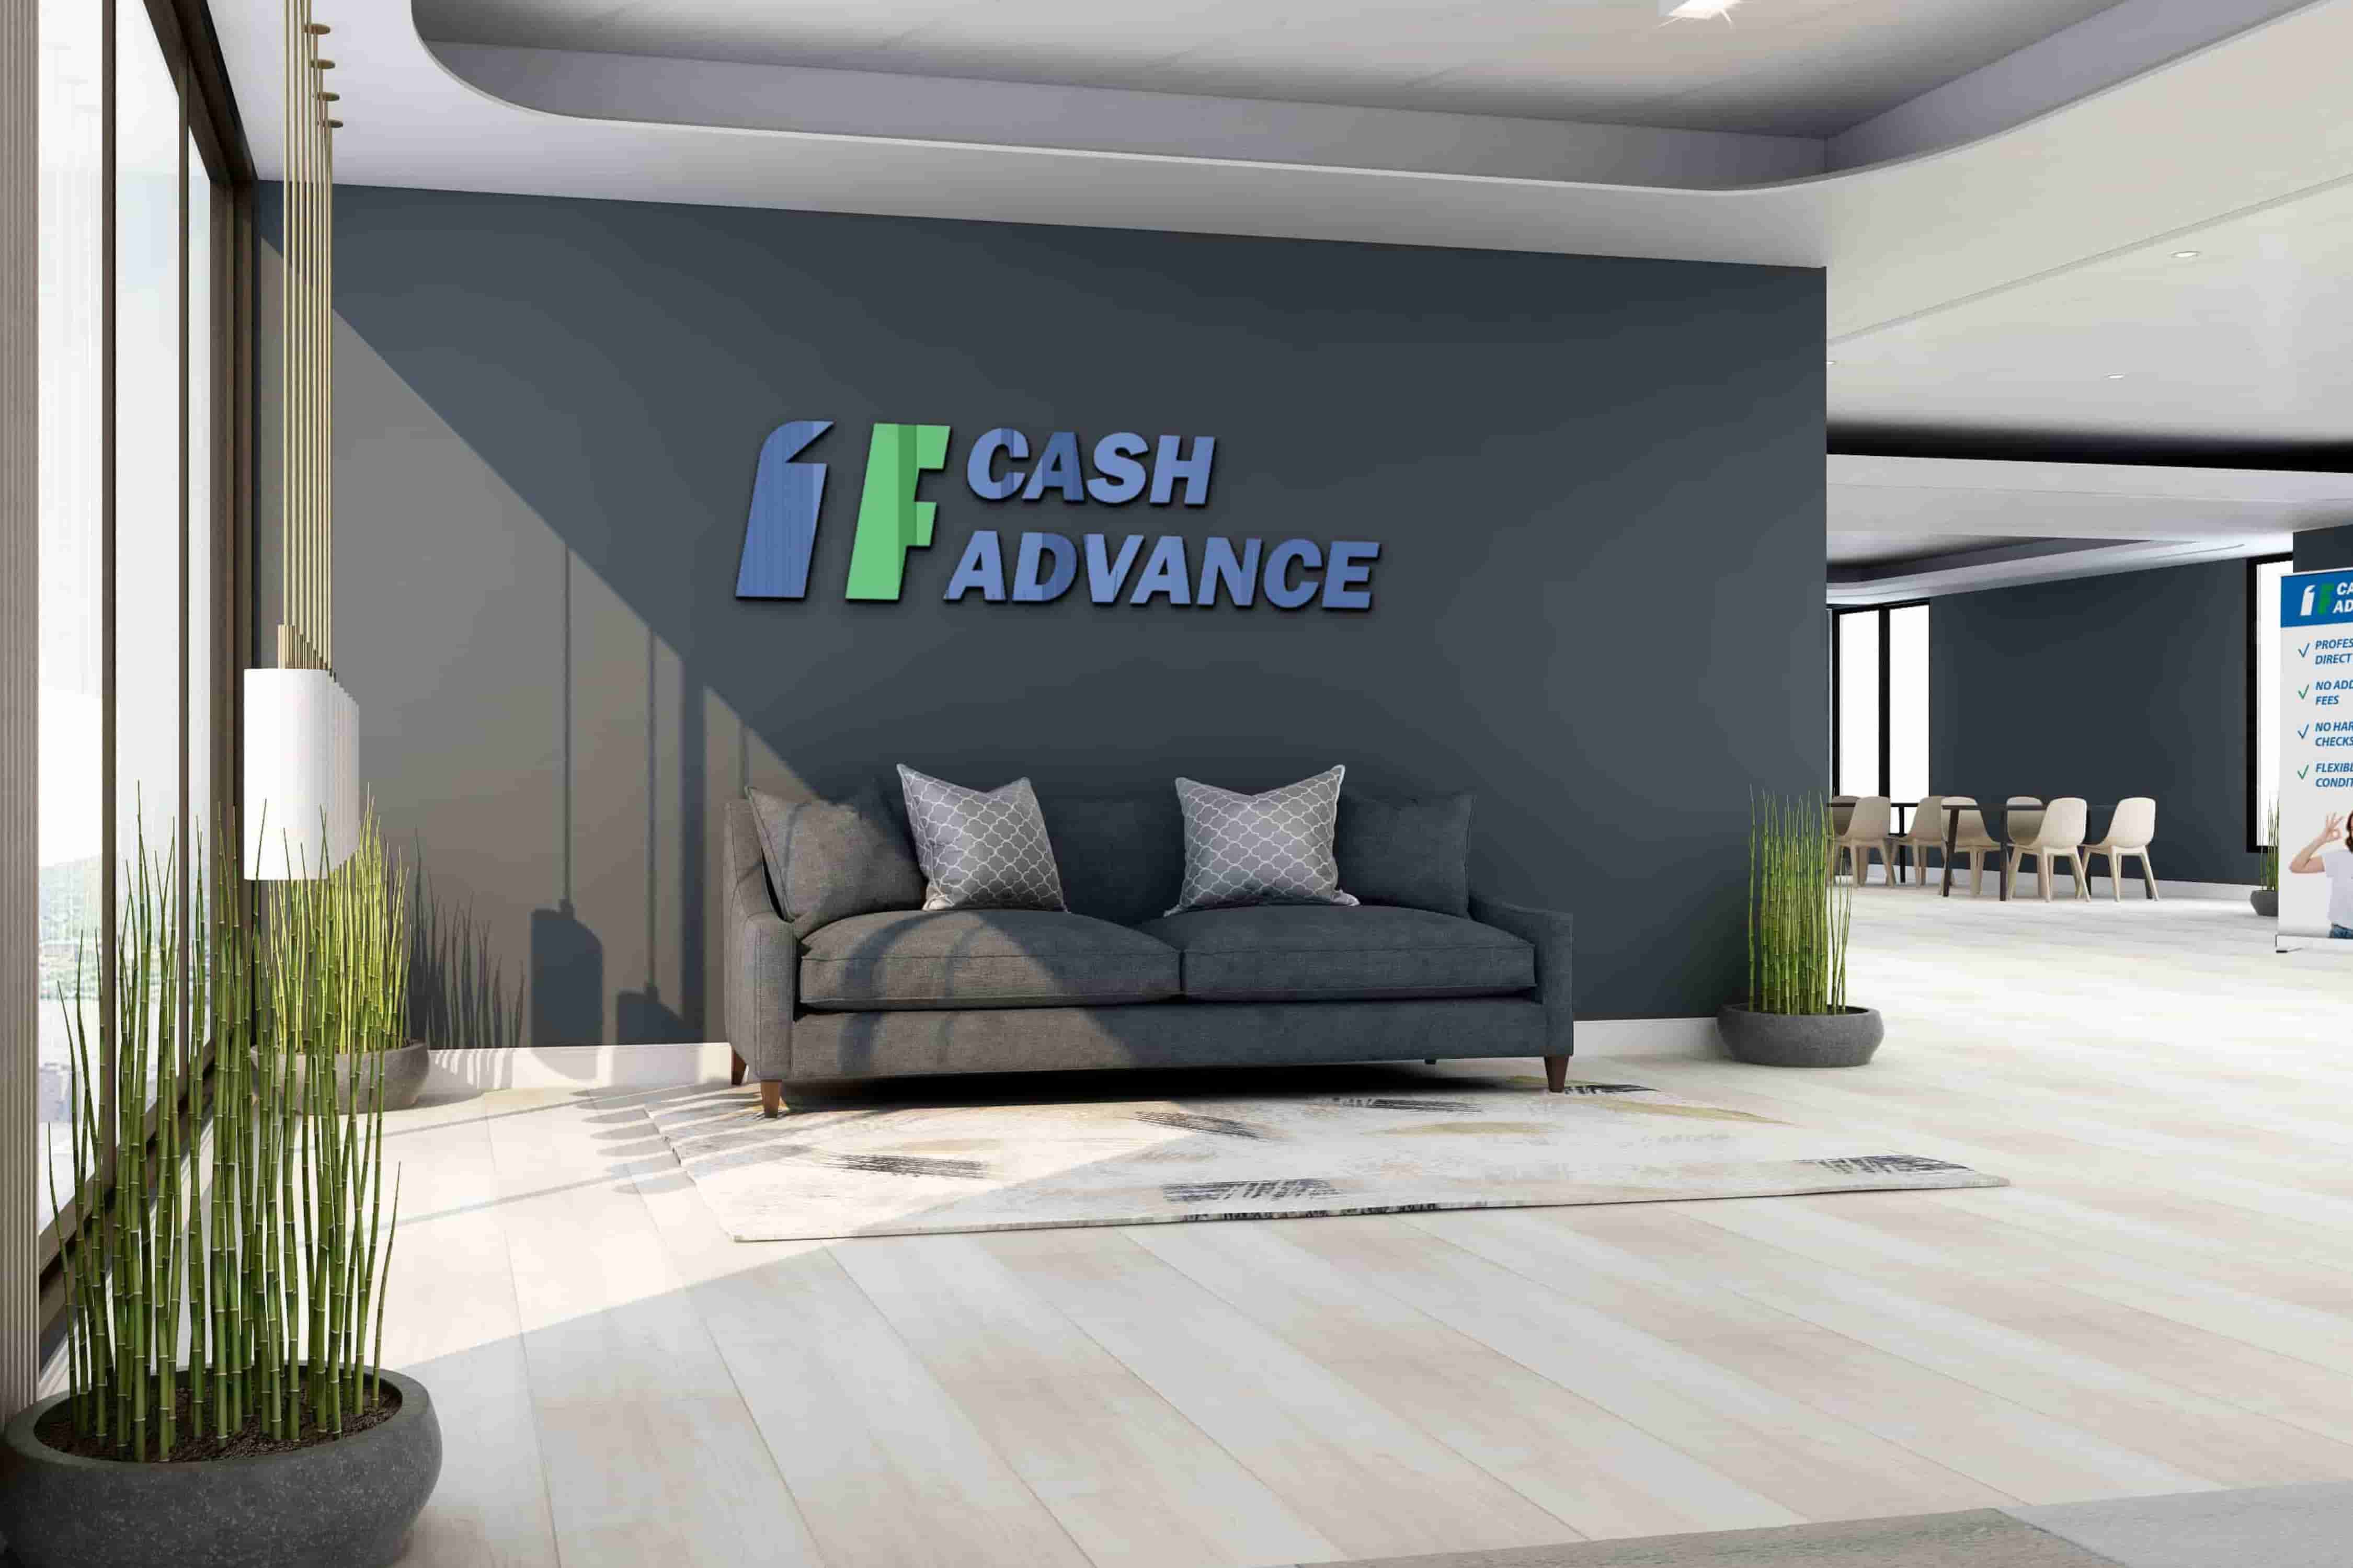 Cash advance in Denver, CO